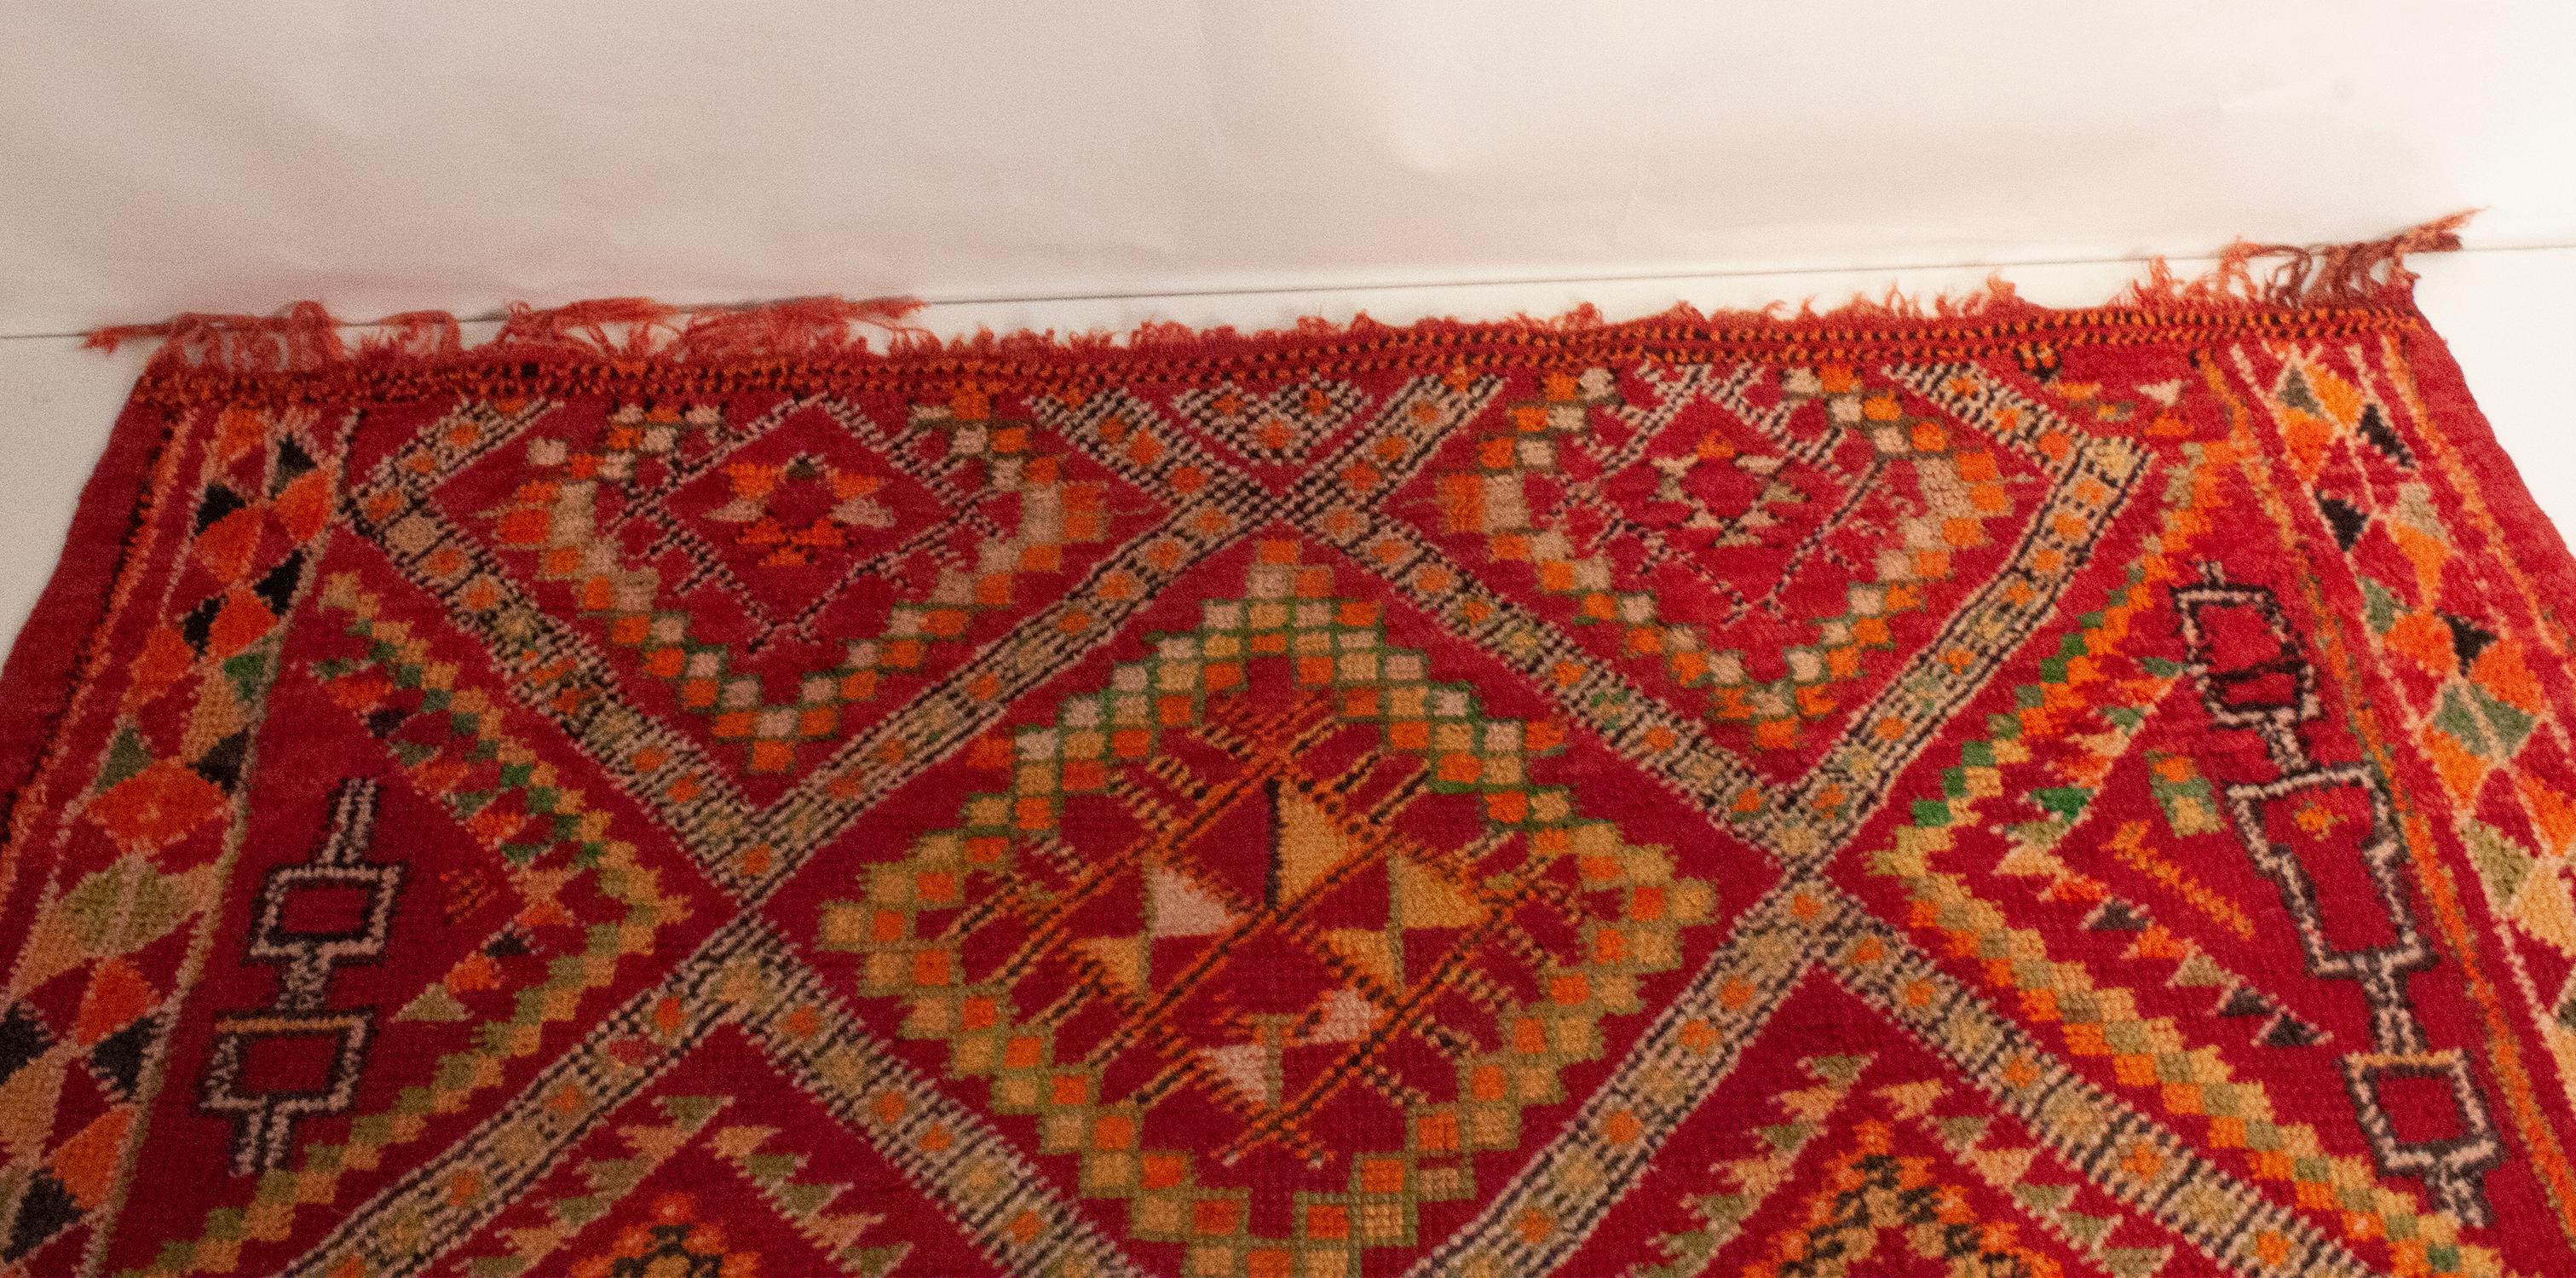 Tribal Vintage Colorful Moroccan Carpet For Sale